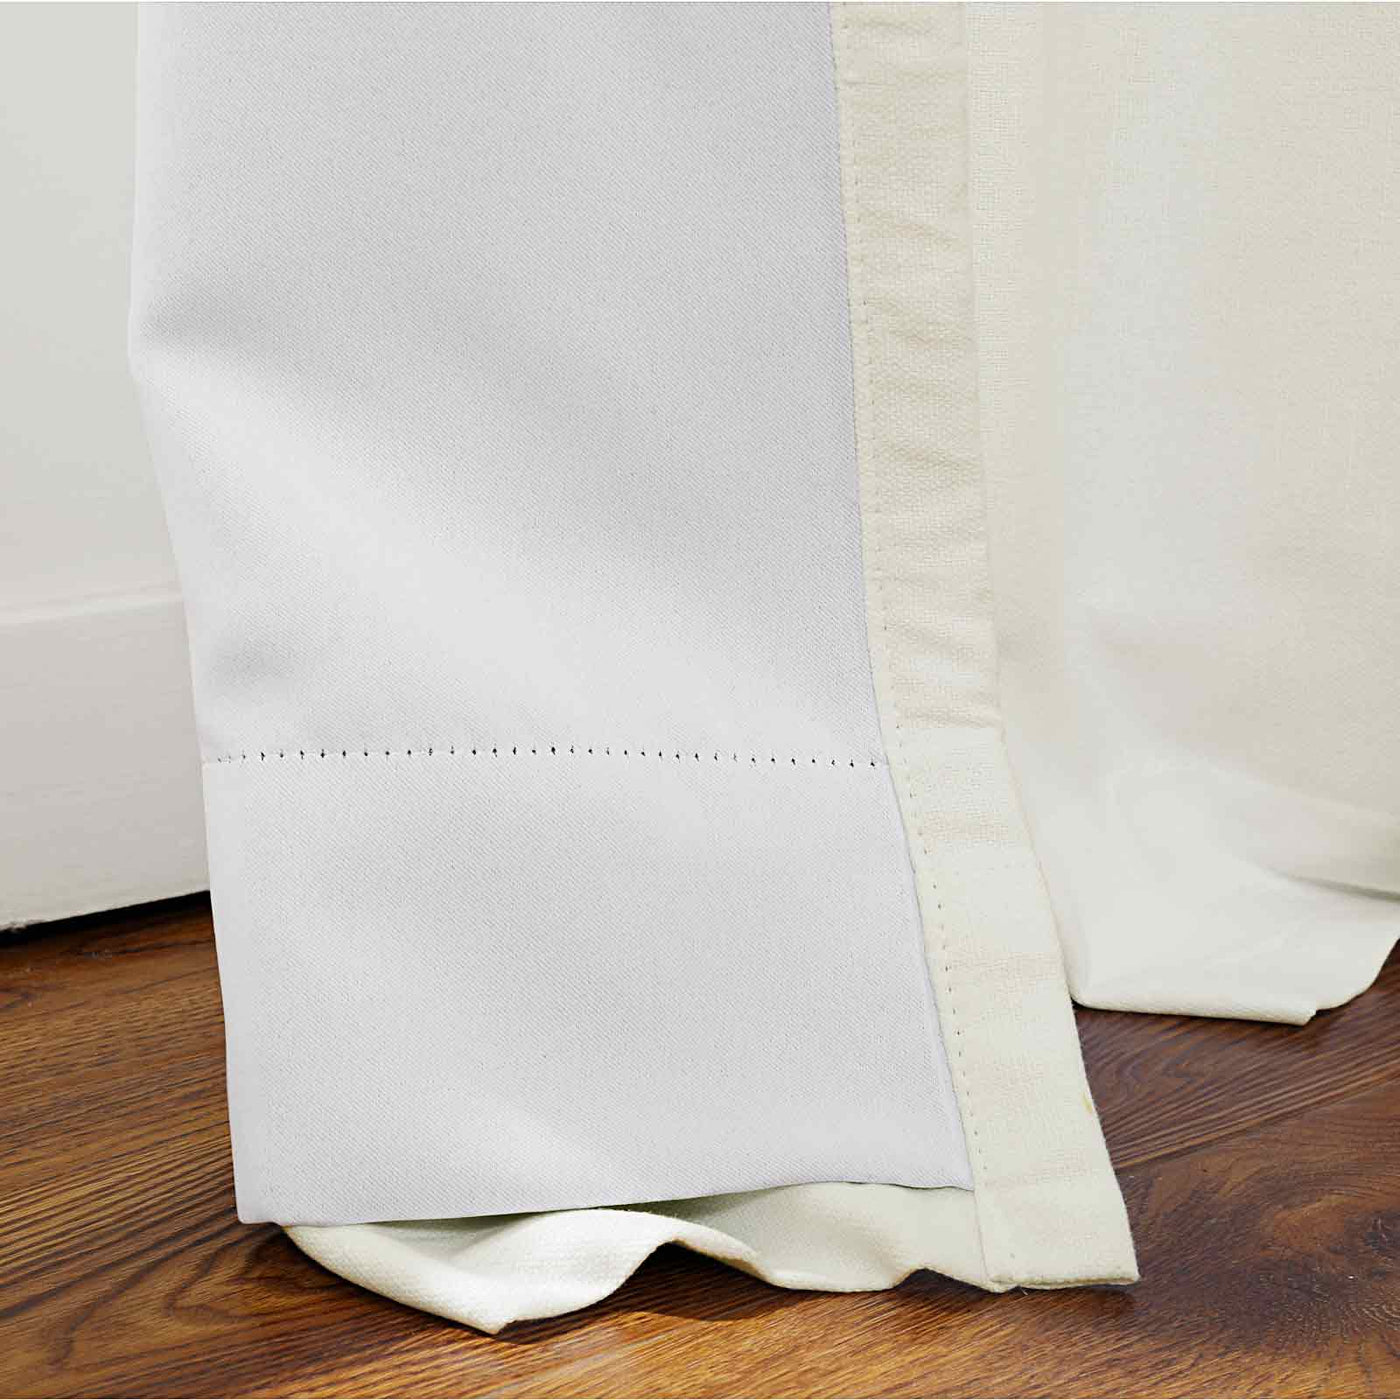 Broad 100% Cotton Plain Weave Curtain Pleated